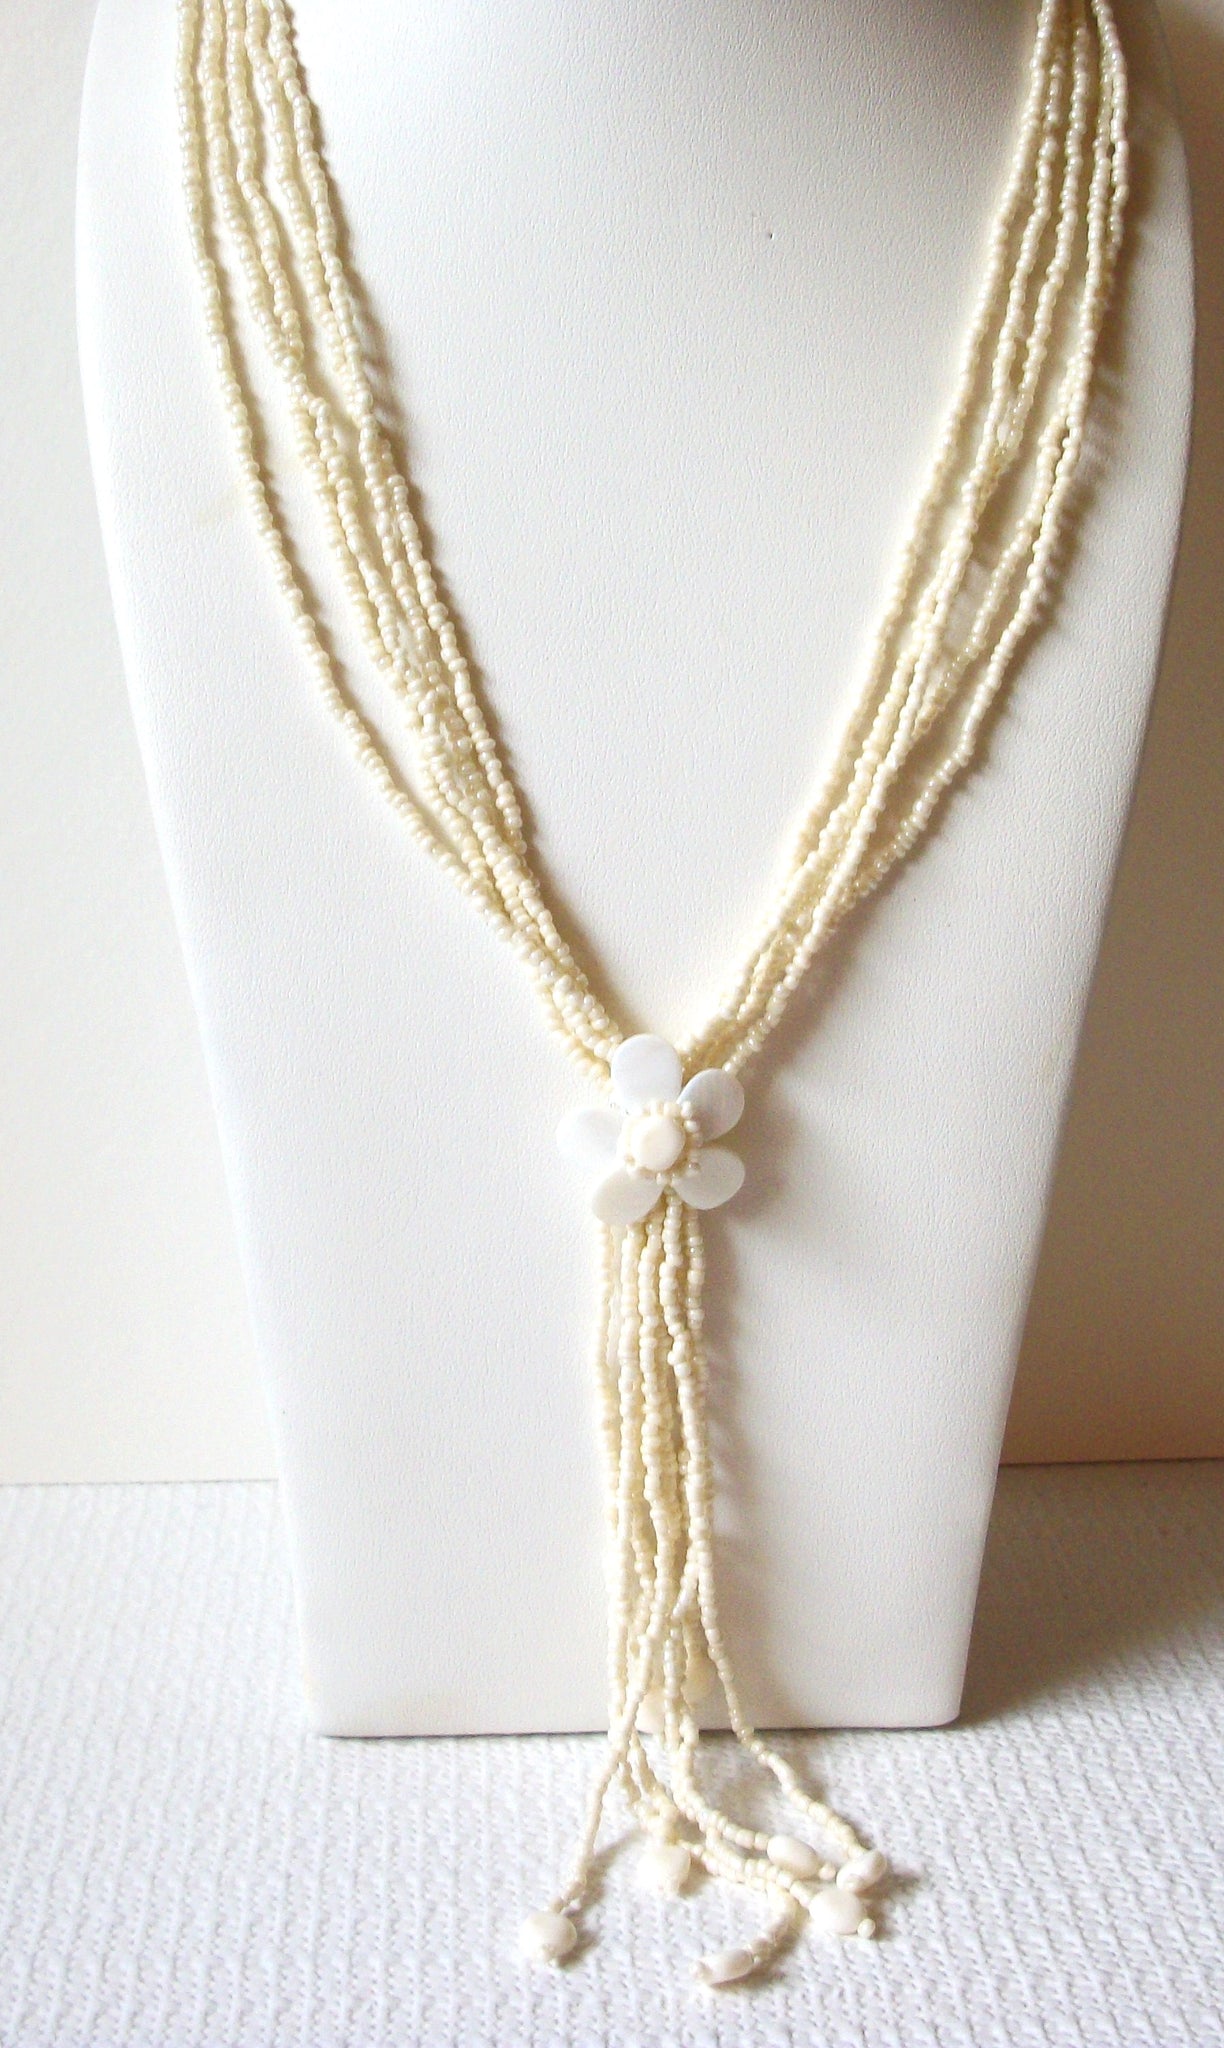 Vintage Glass Beads Tassel Necklace 82020